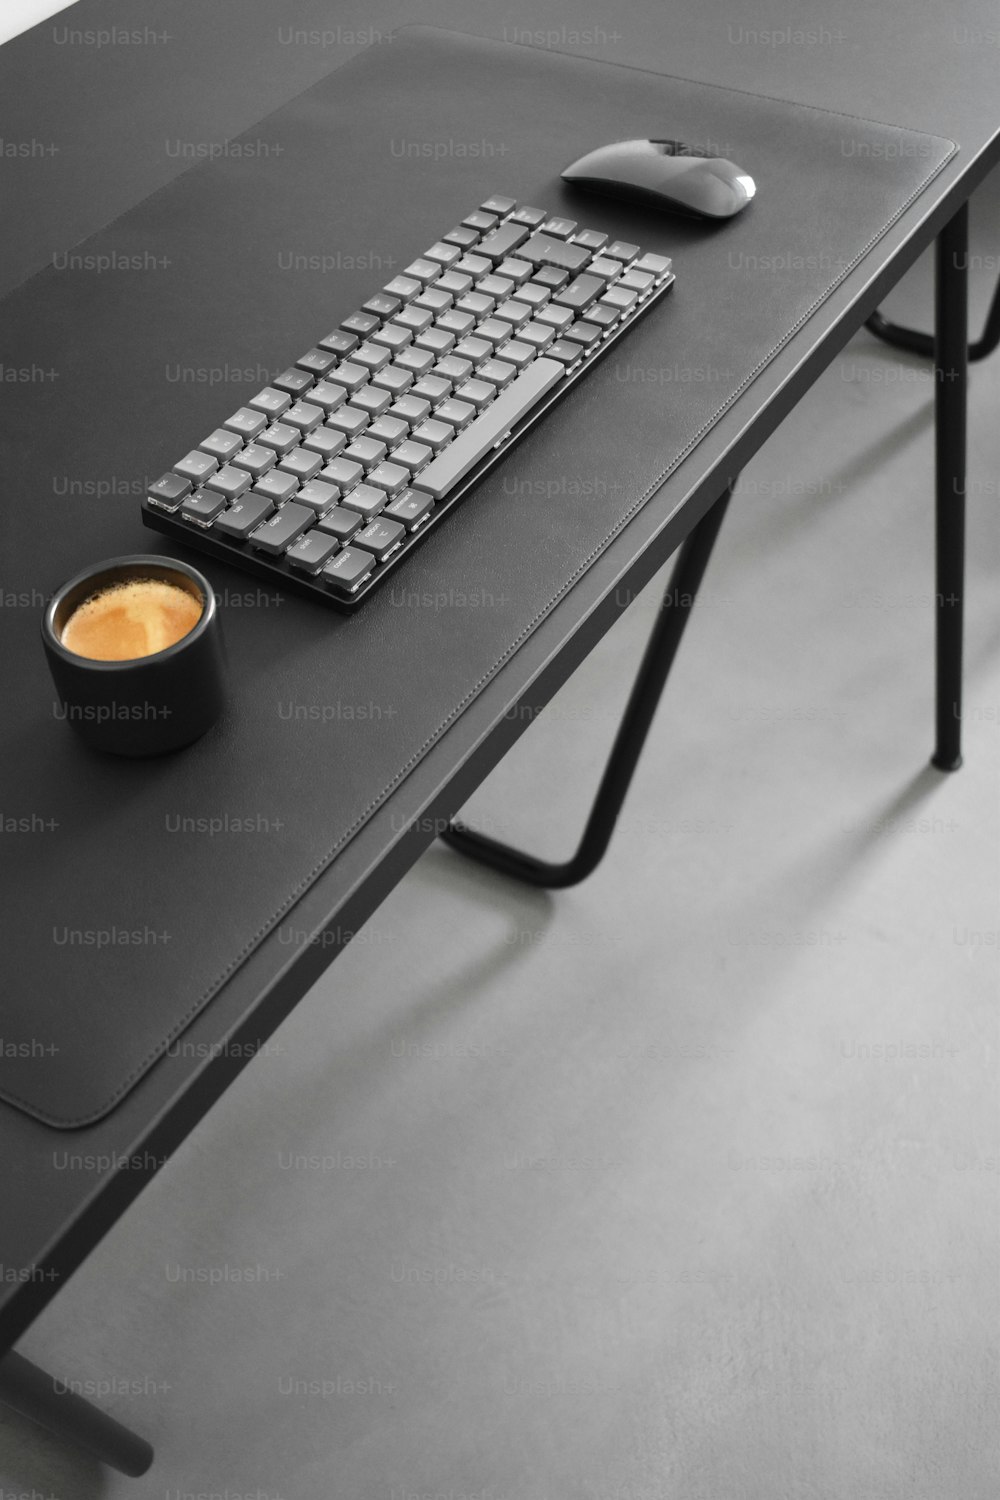 un escritorio de computadora con teclado, mouse y taza de café